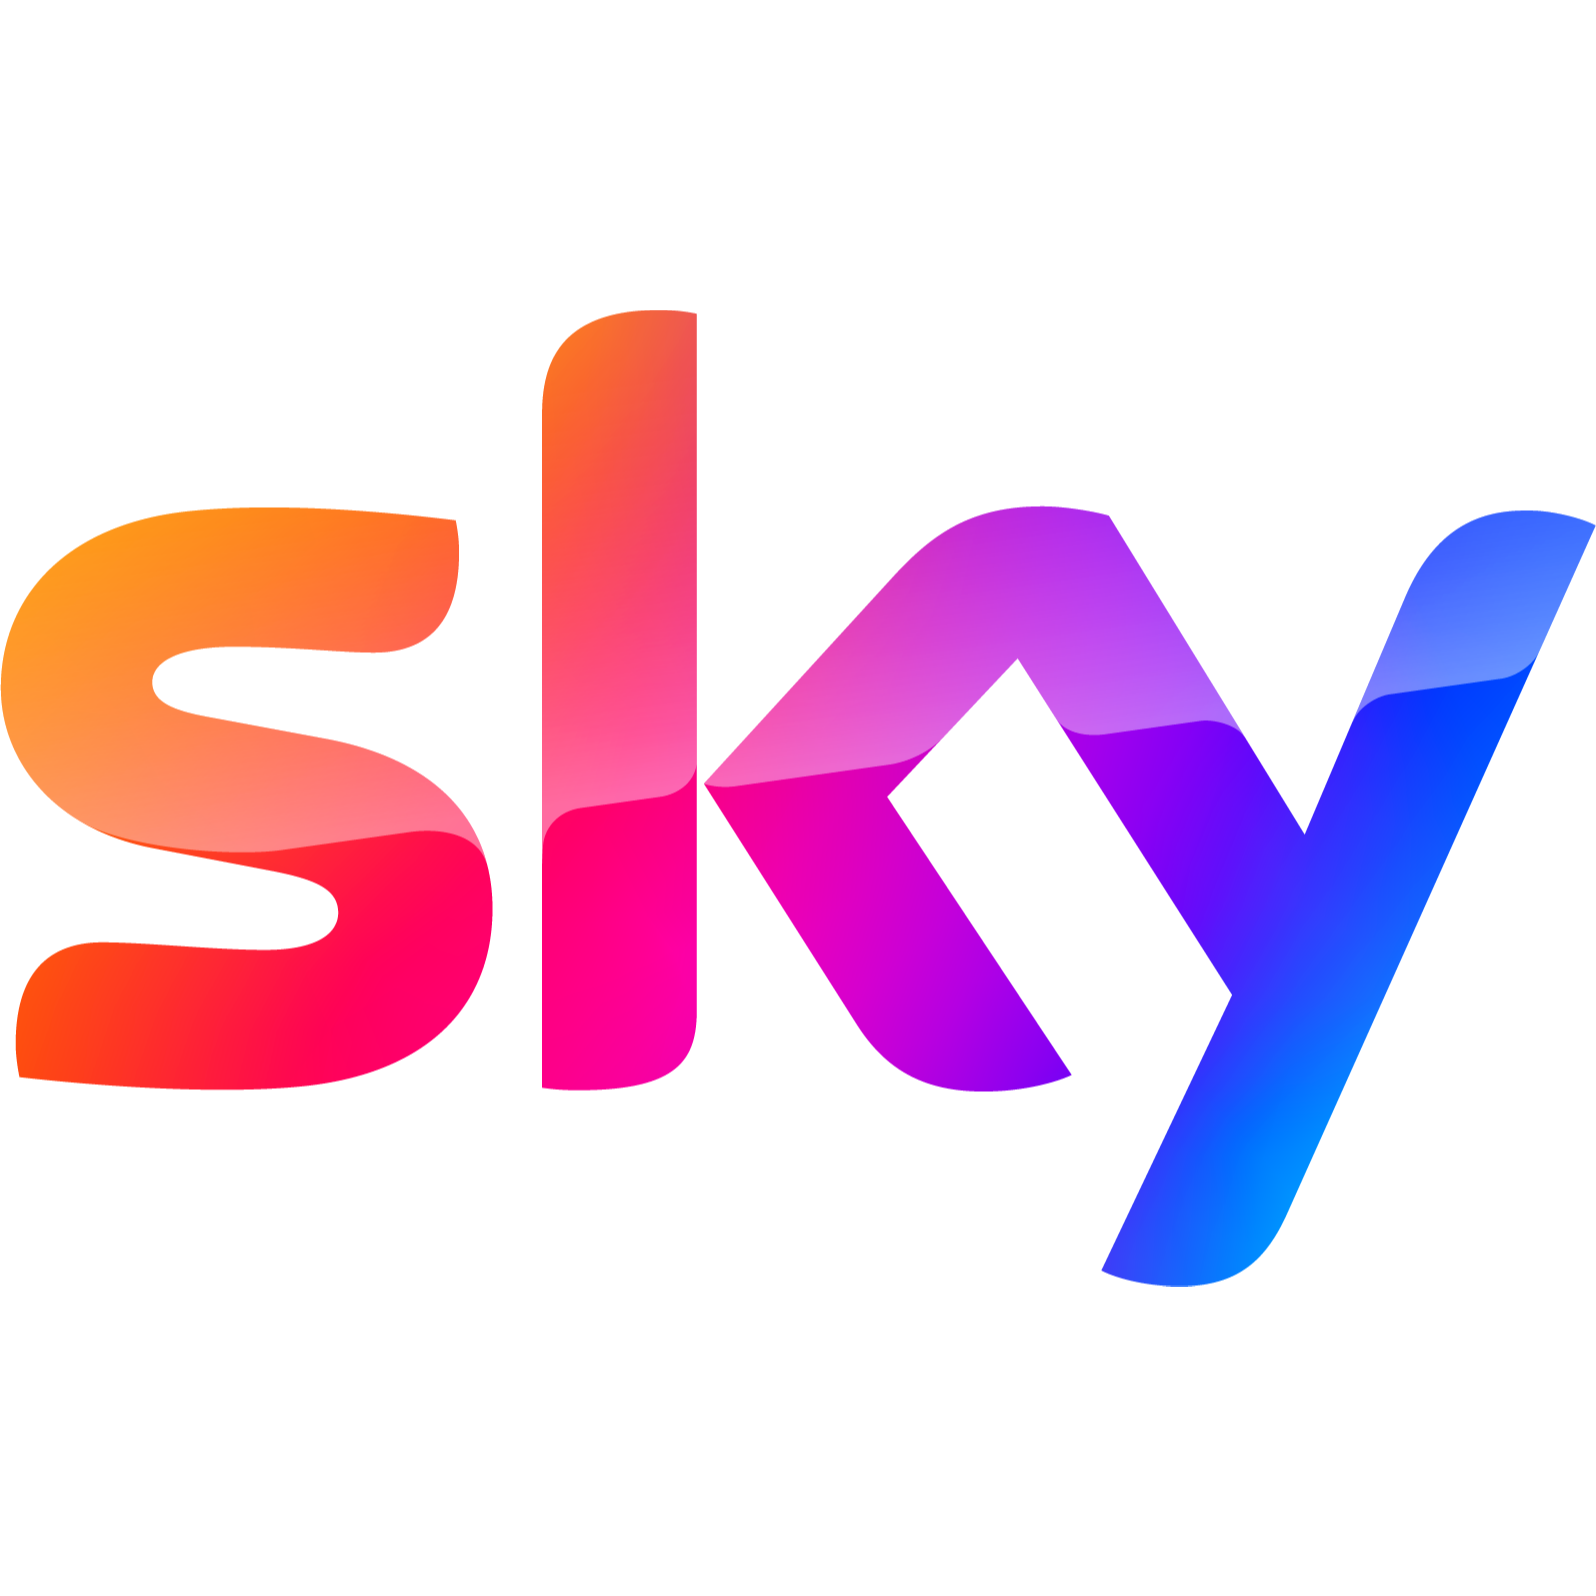 Sky Flagship Store Oberhausen Logo